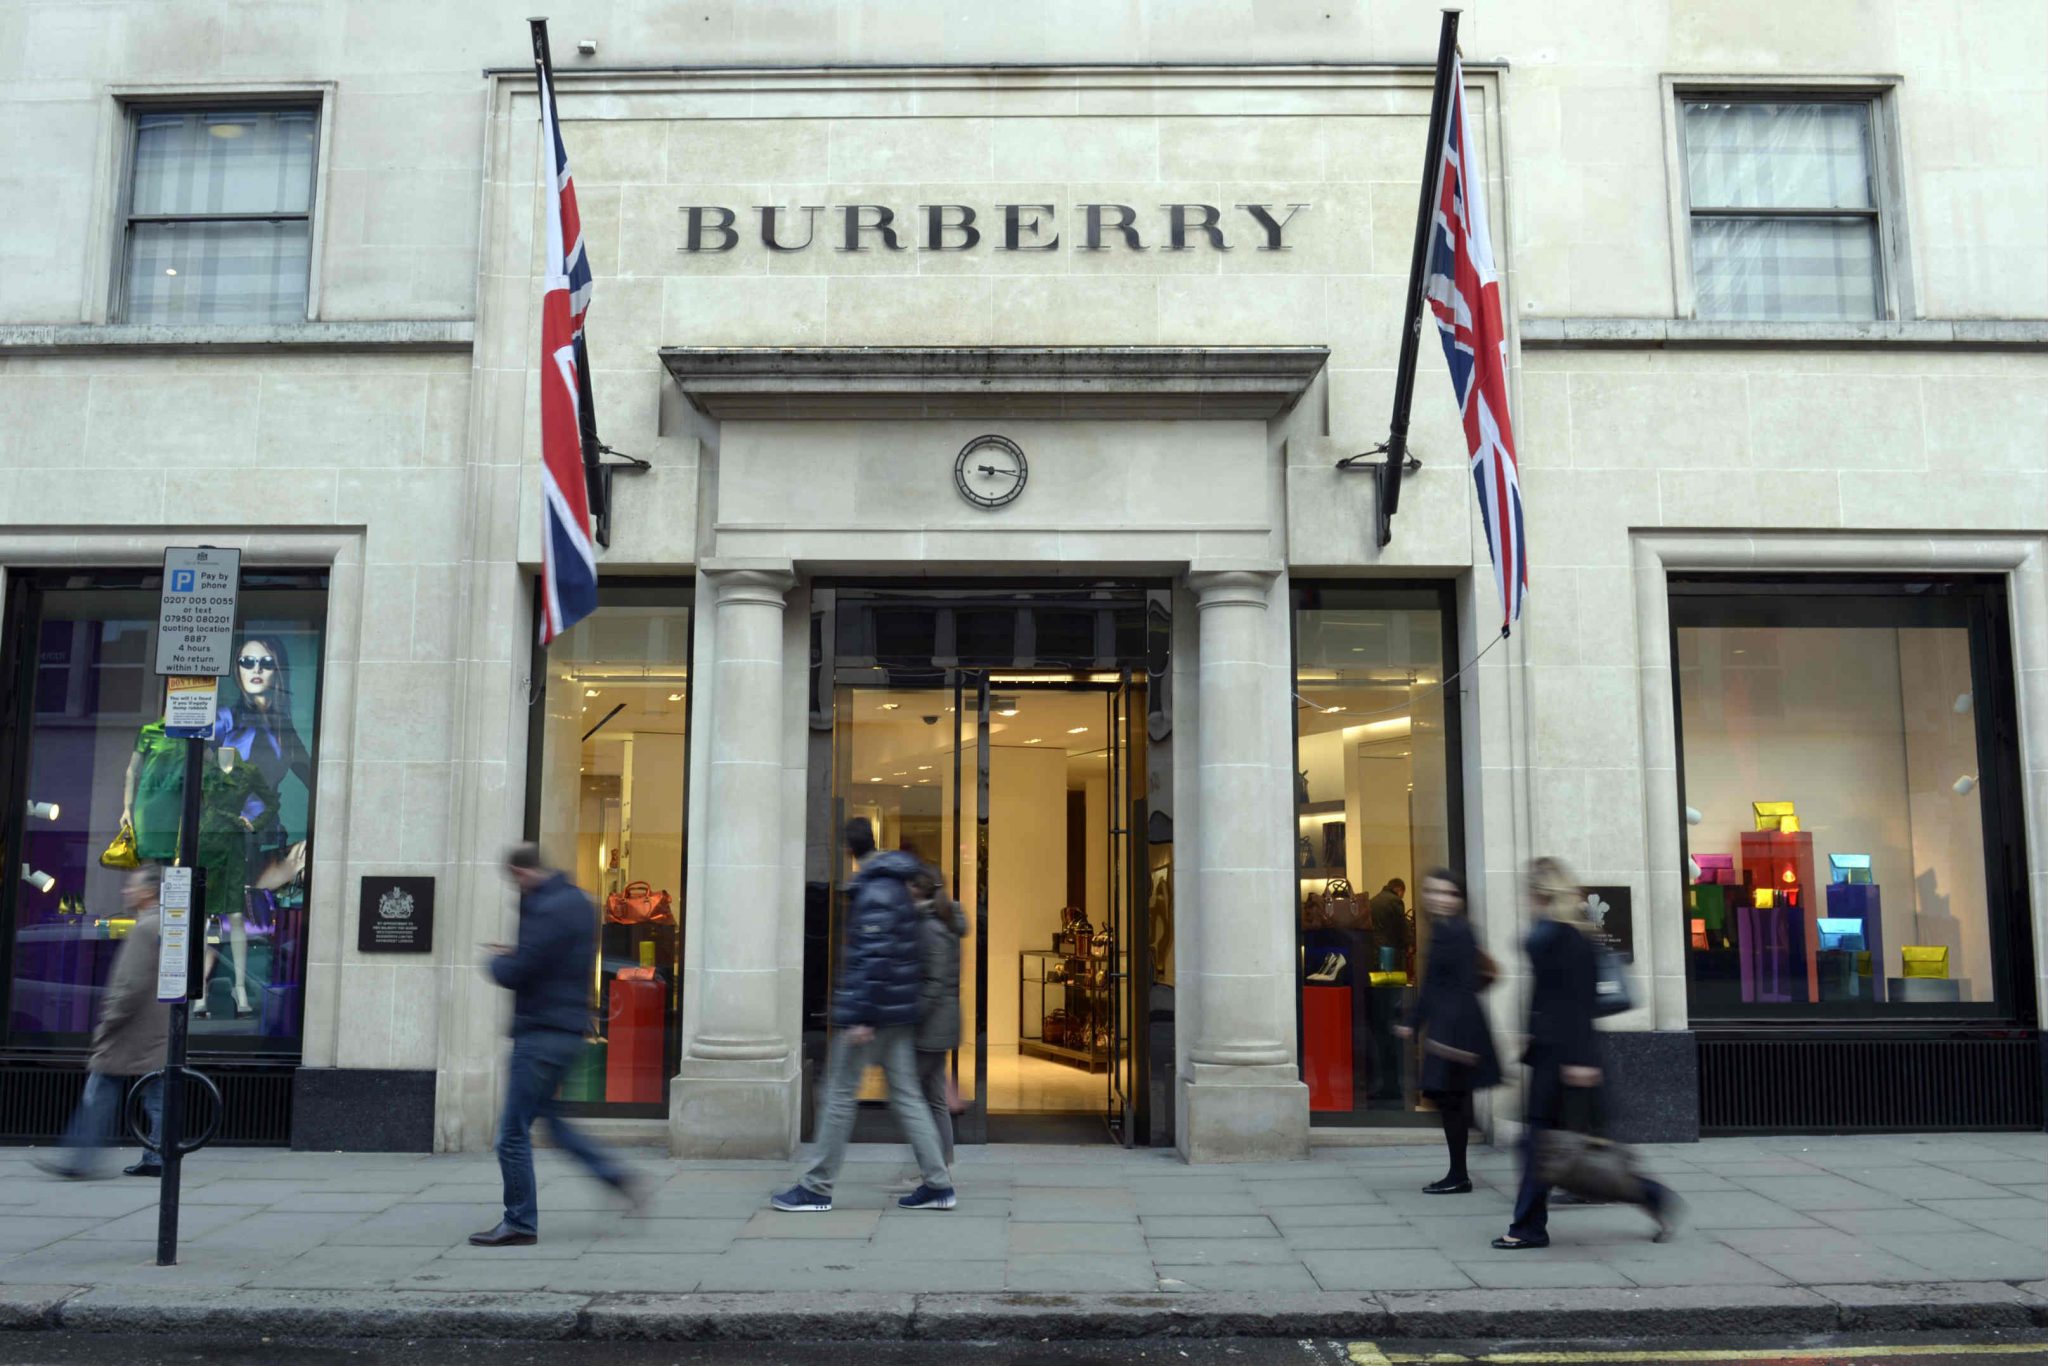 burberry store london england